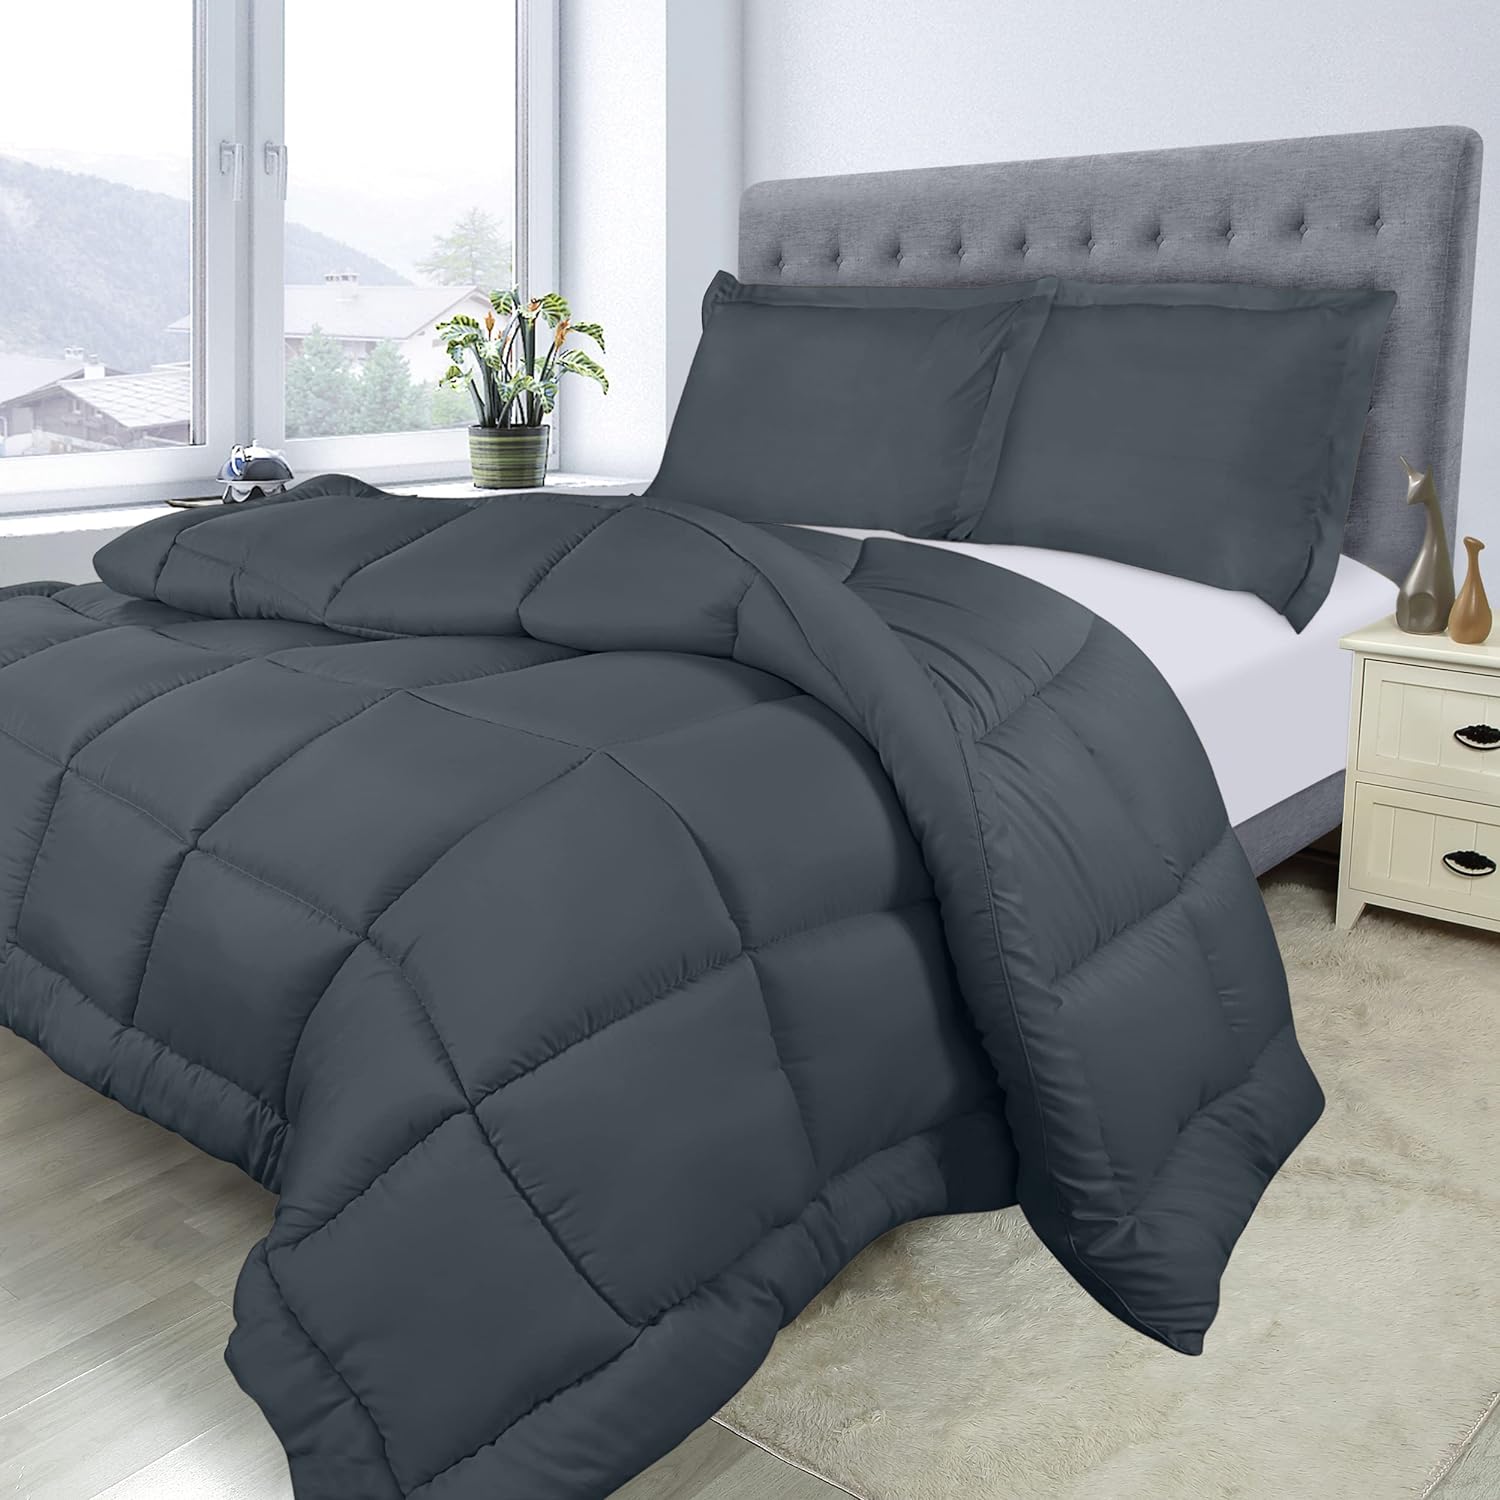 Utopia Bedding Comforter Duvet Insert - Quilted Comforter with Corner Tabs  - Box Stitched Down Alternative Comforter (Queen, White)